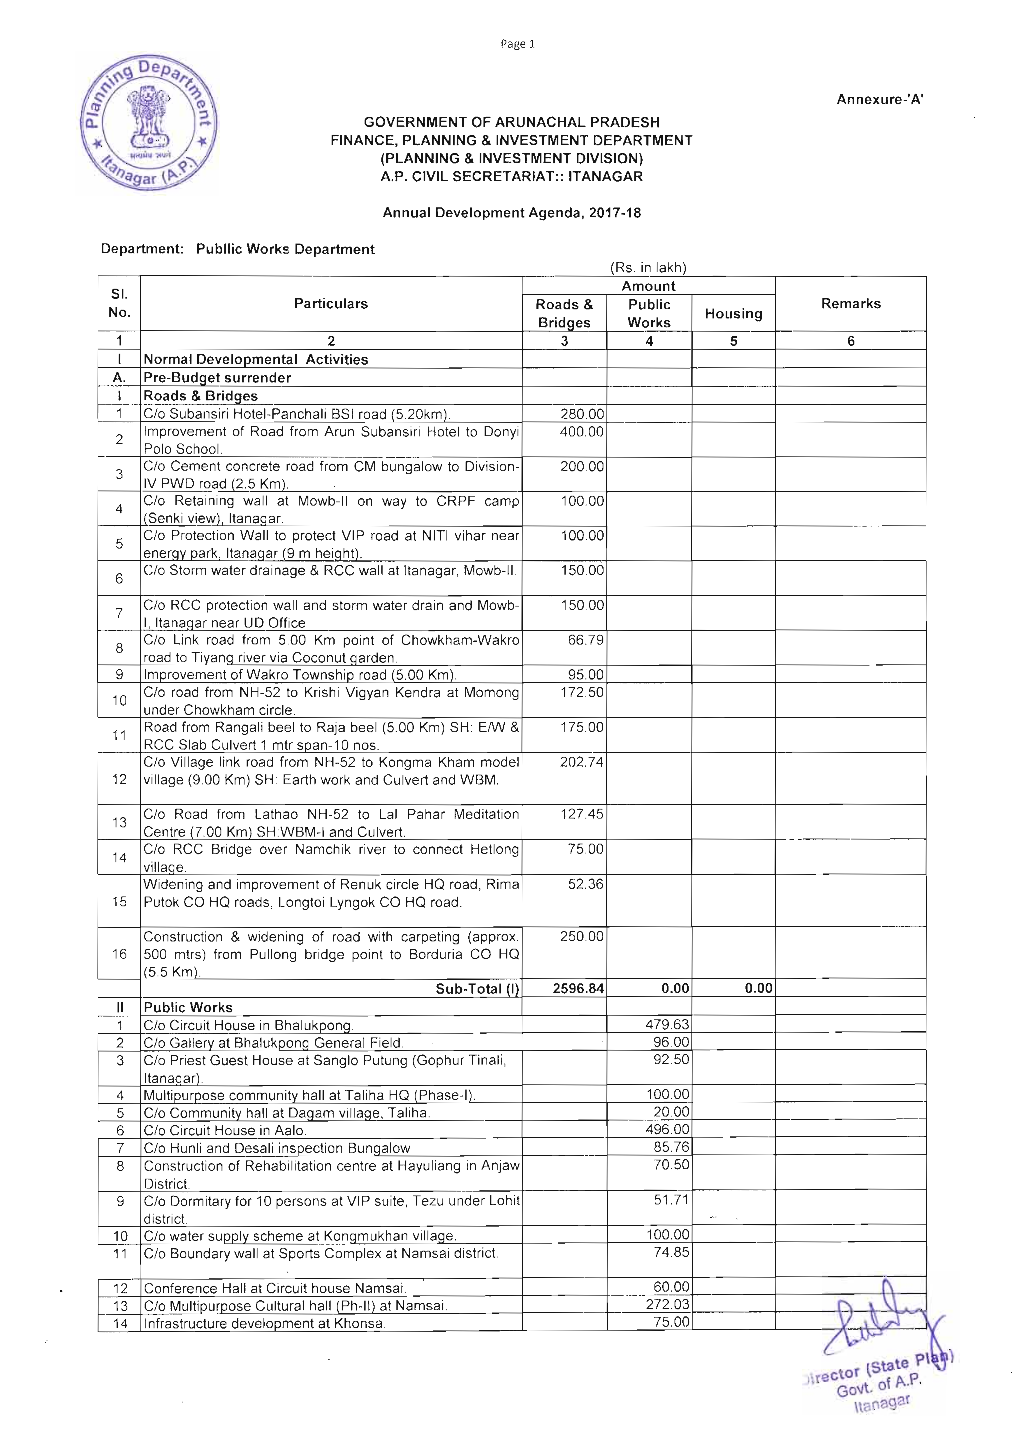 Vernment of Arunachal Pradesh Finance, Planning & Investment Department (Planntng & Tnvestment Dtvtston) A.P